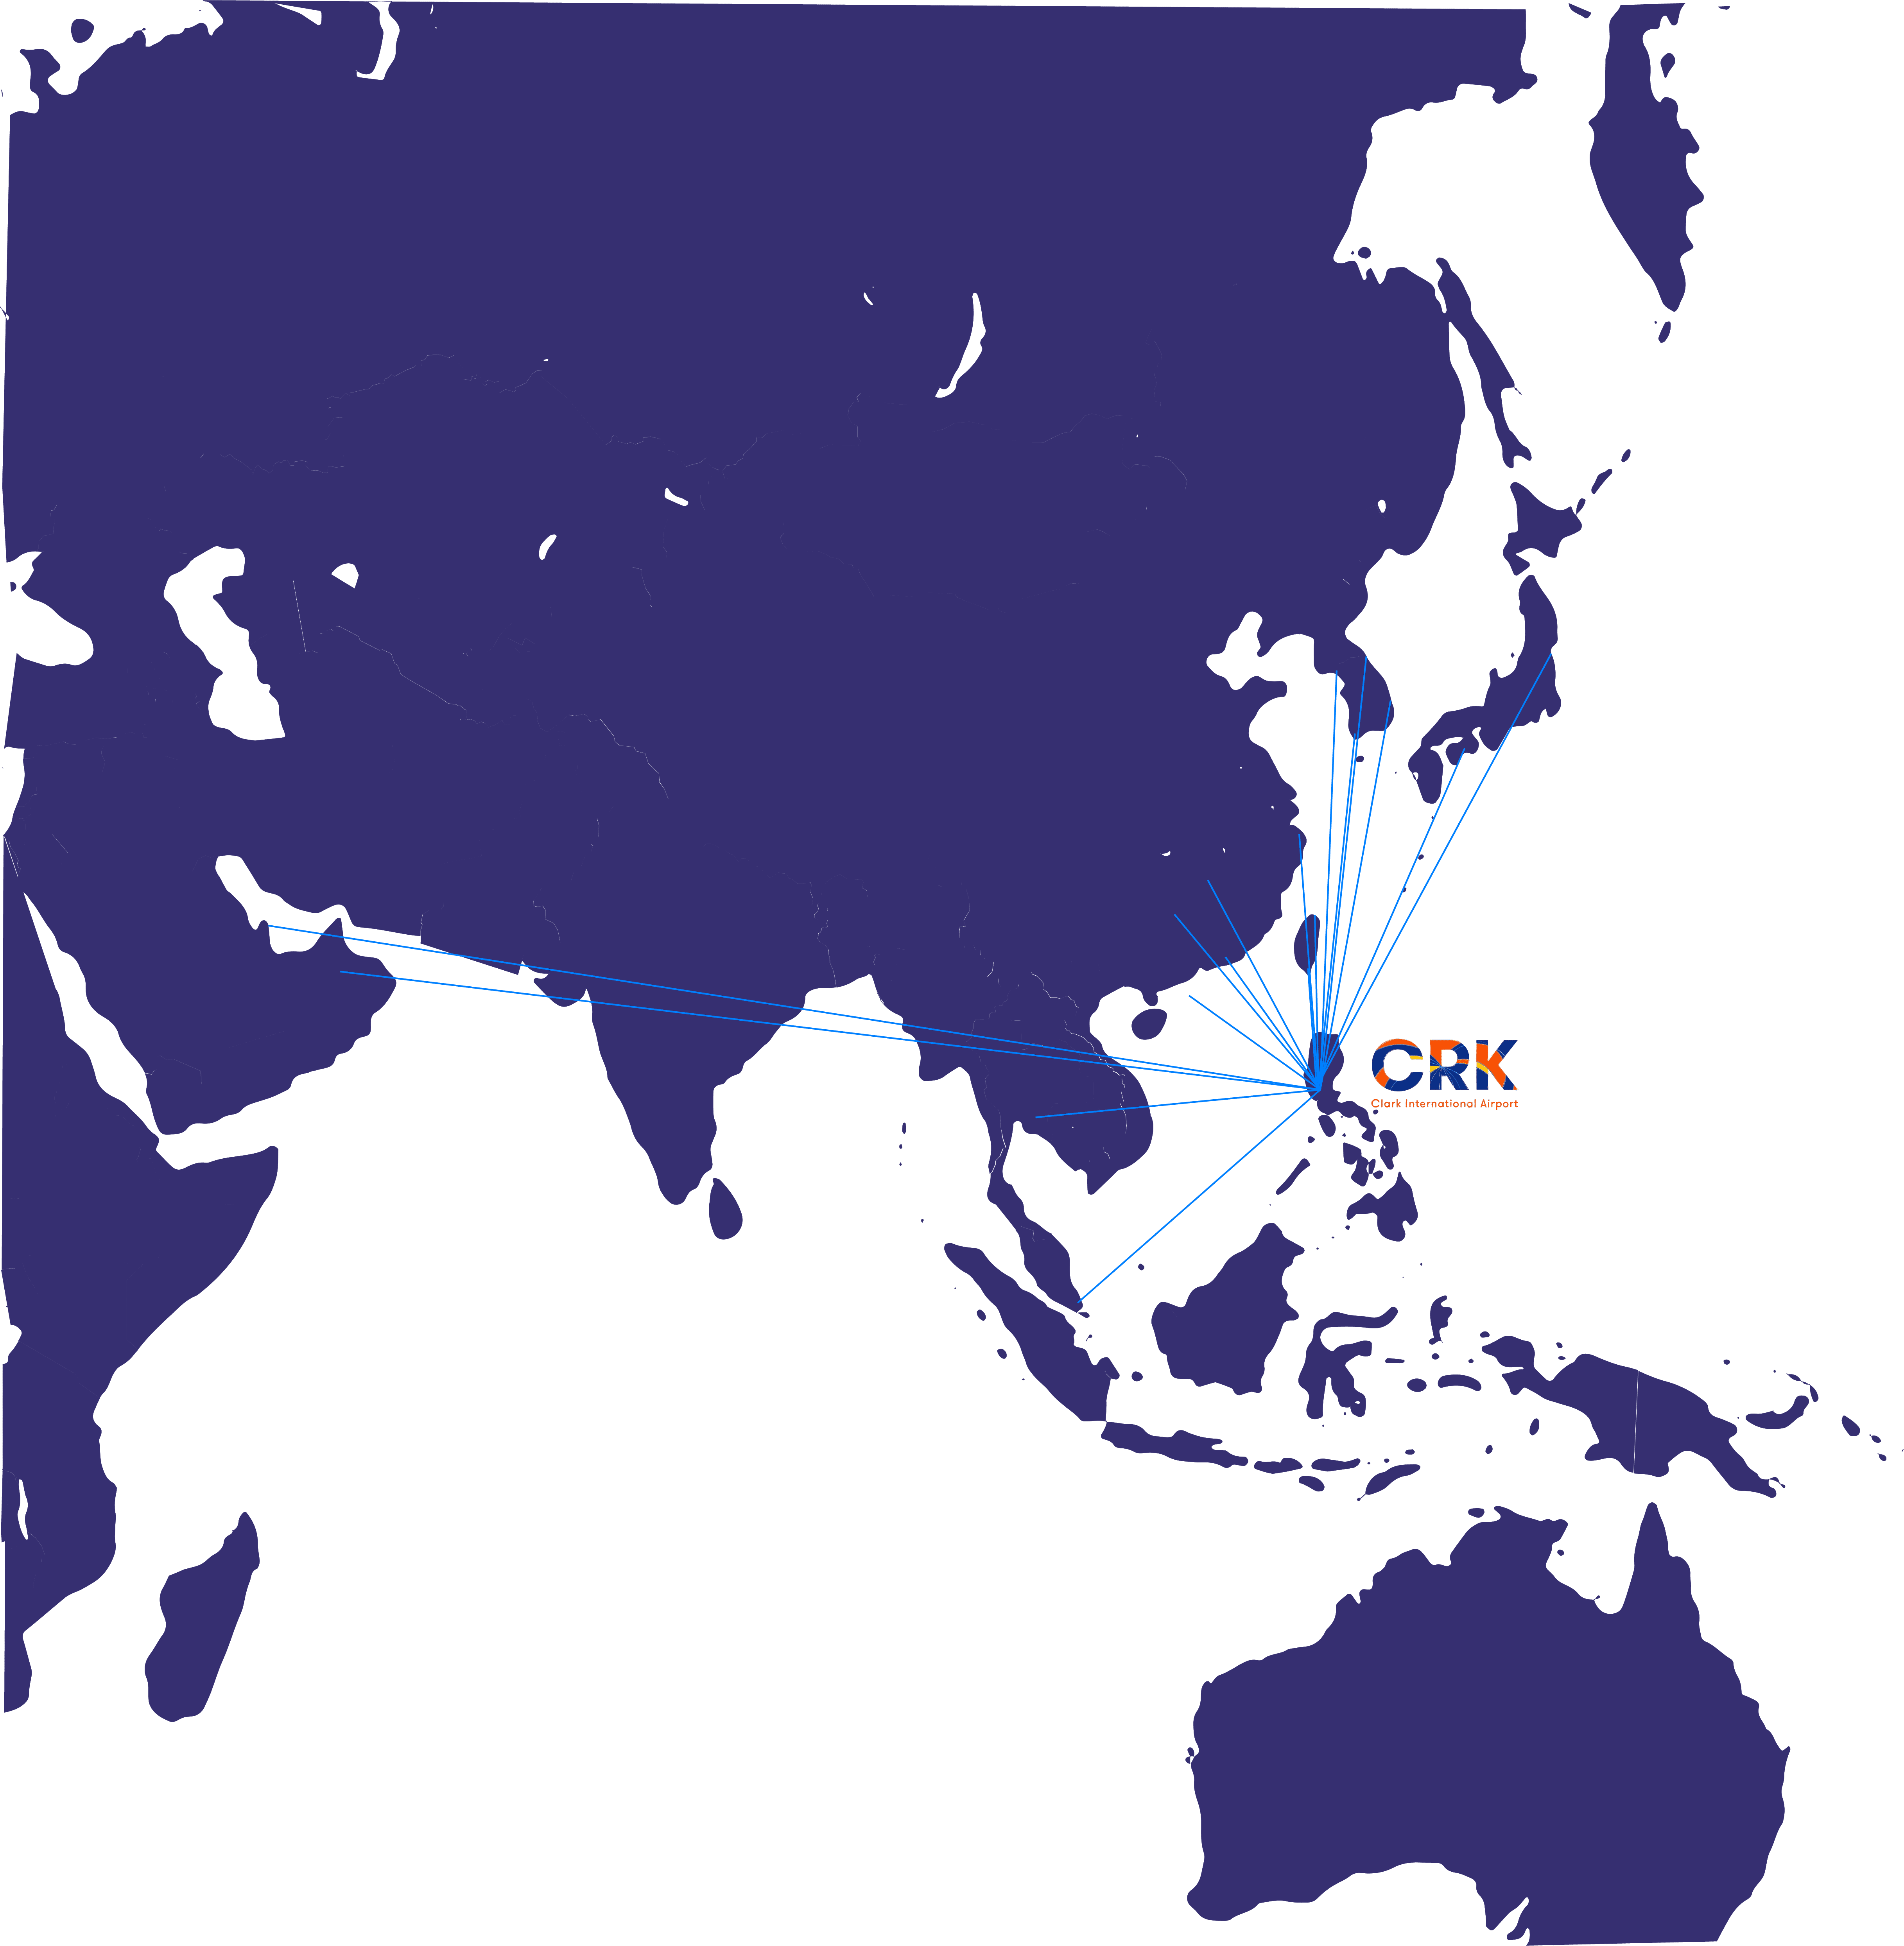 clark international airport map